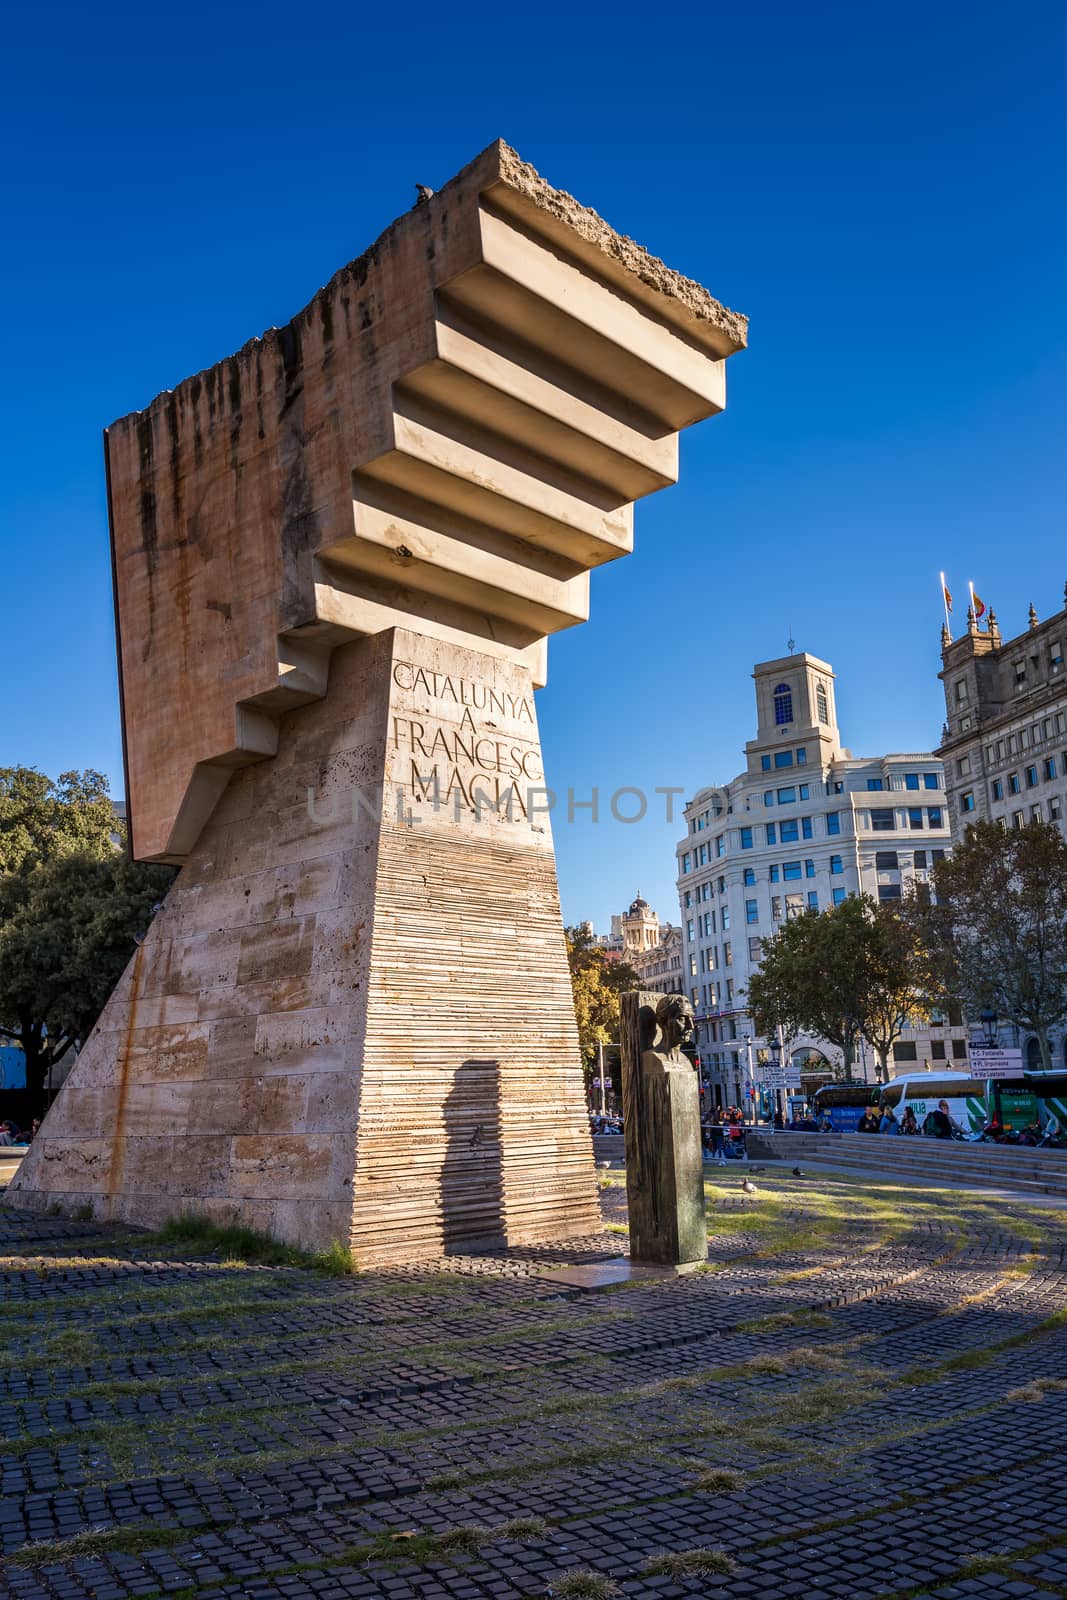 Francesc Macia Memorial on Placa de Catalunya, Barcelona, Spain by anshar